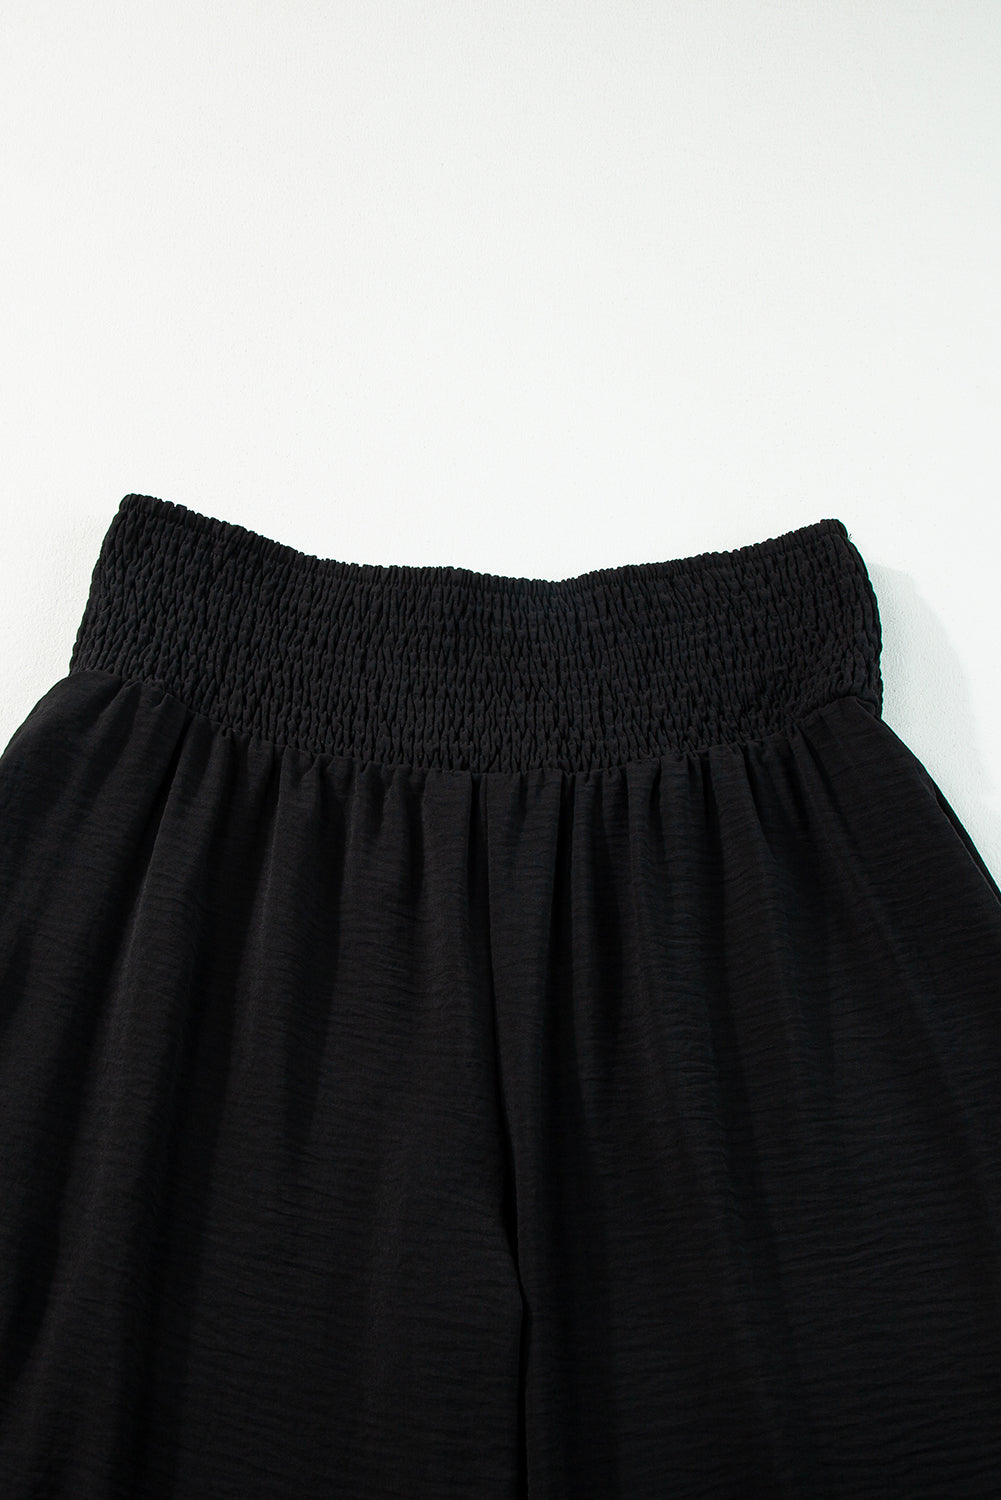 Black Shirred High Waist Plus Size Wide Leg Pants